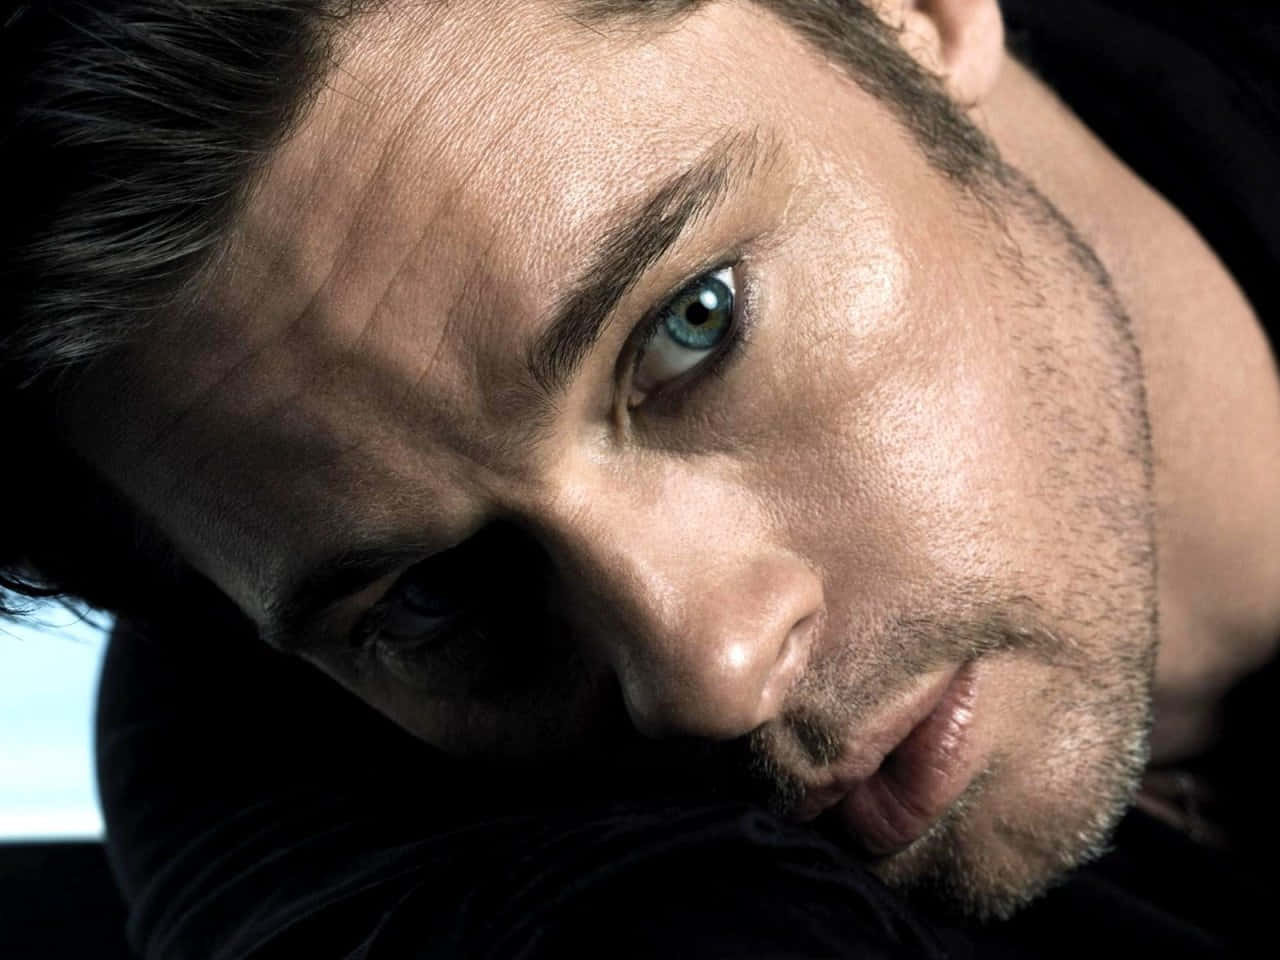 Brad Pitt, One of Hollywood's Most Popular Stars